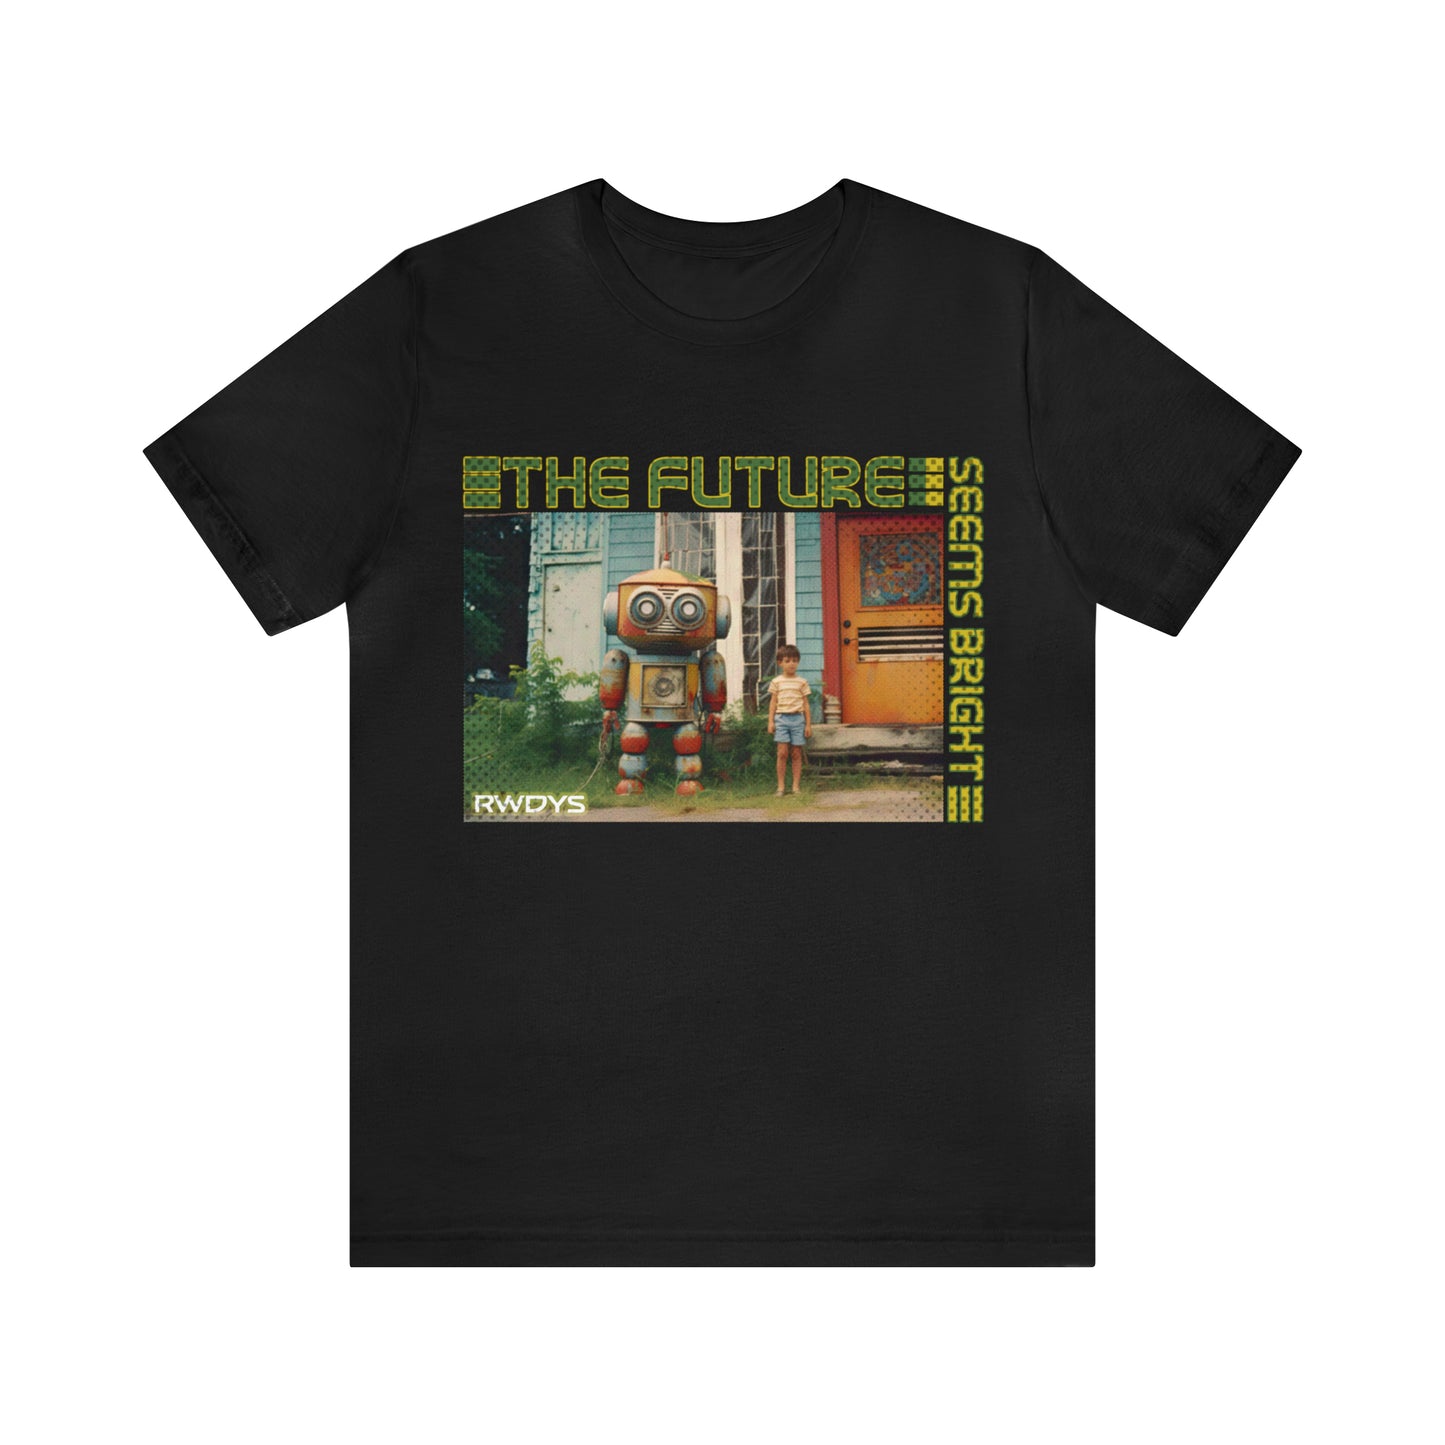 The Future Seems Bright - Rowdy's Clothing Co. T-Shirt